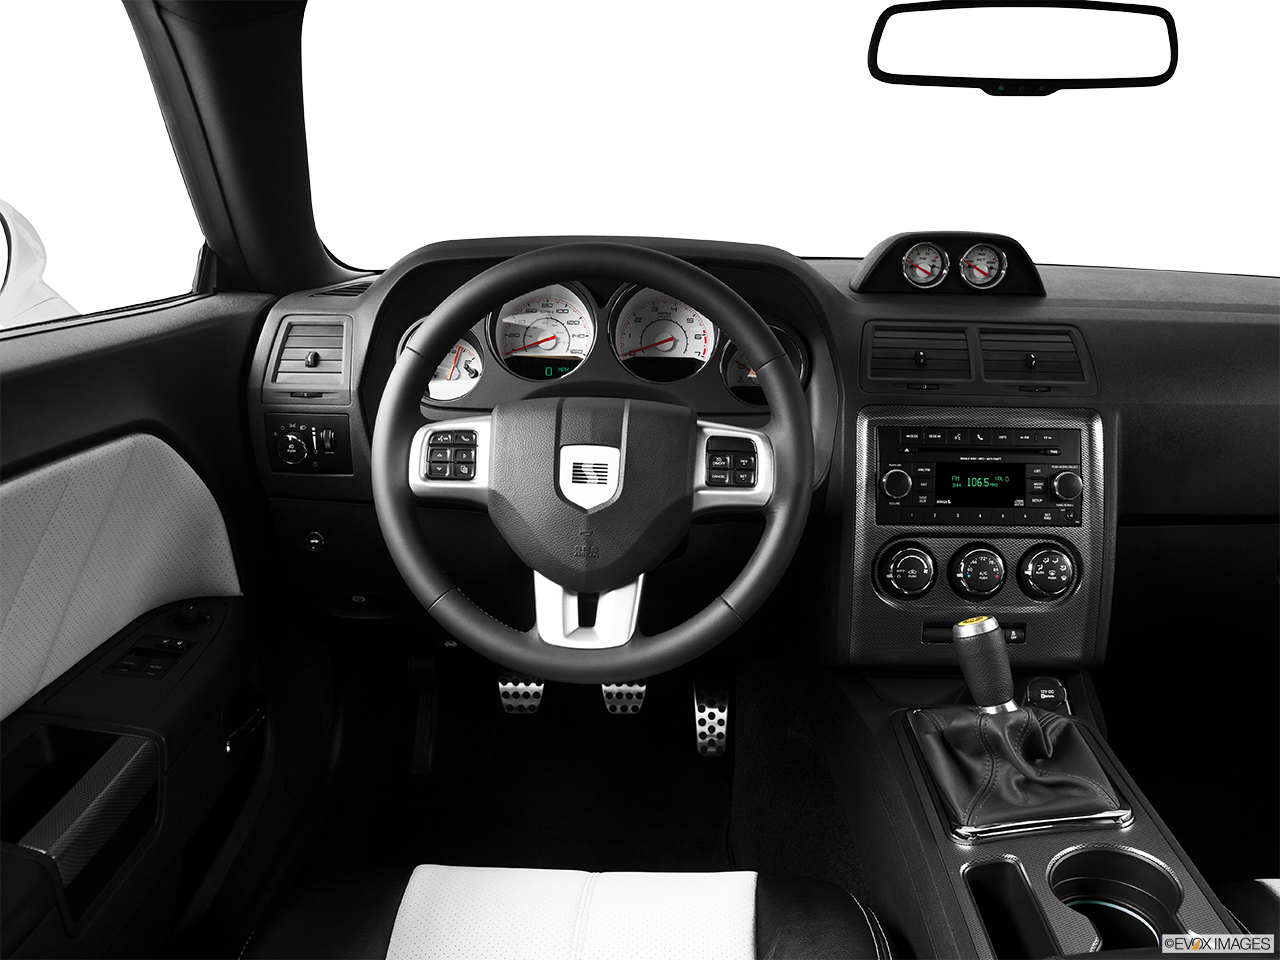 2014 Saleen 570 Challenger Label 570 Black Label Steering wheel/Center Console. 